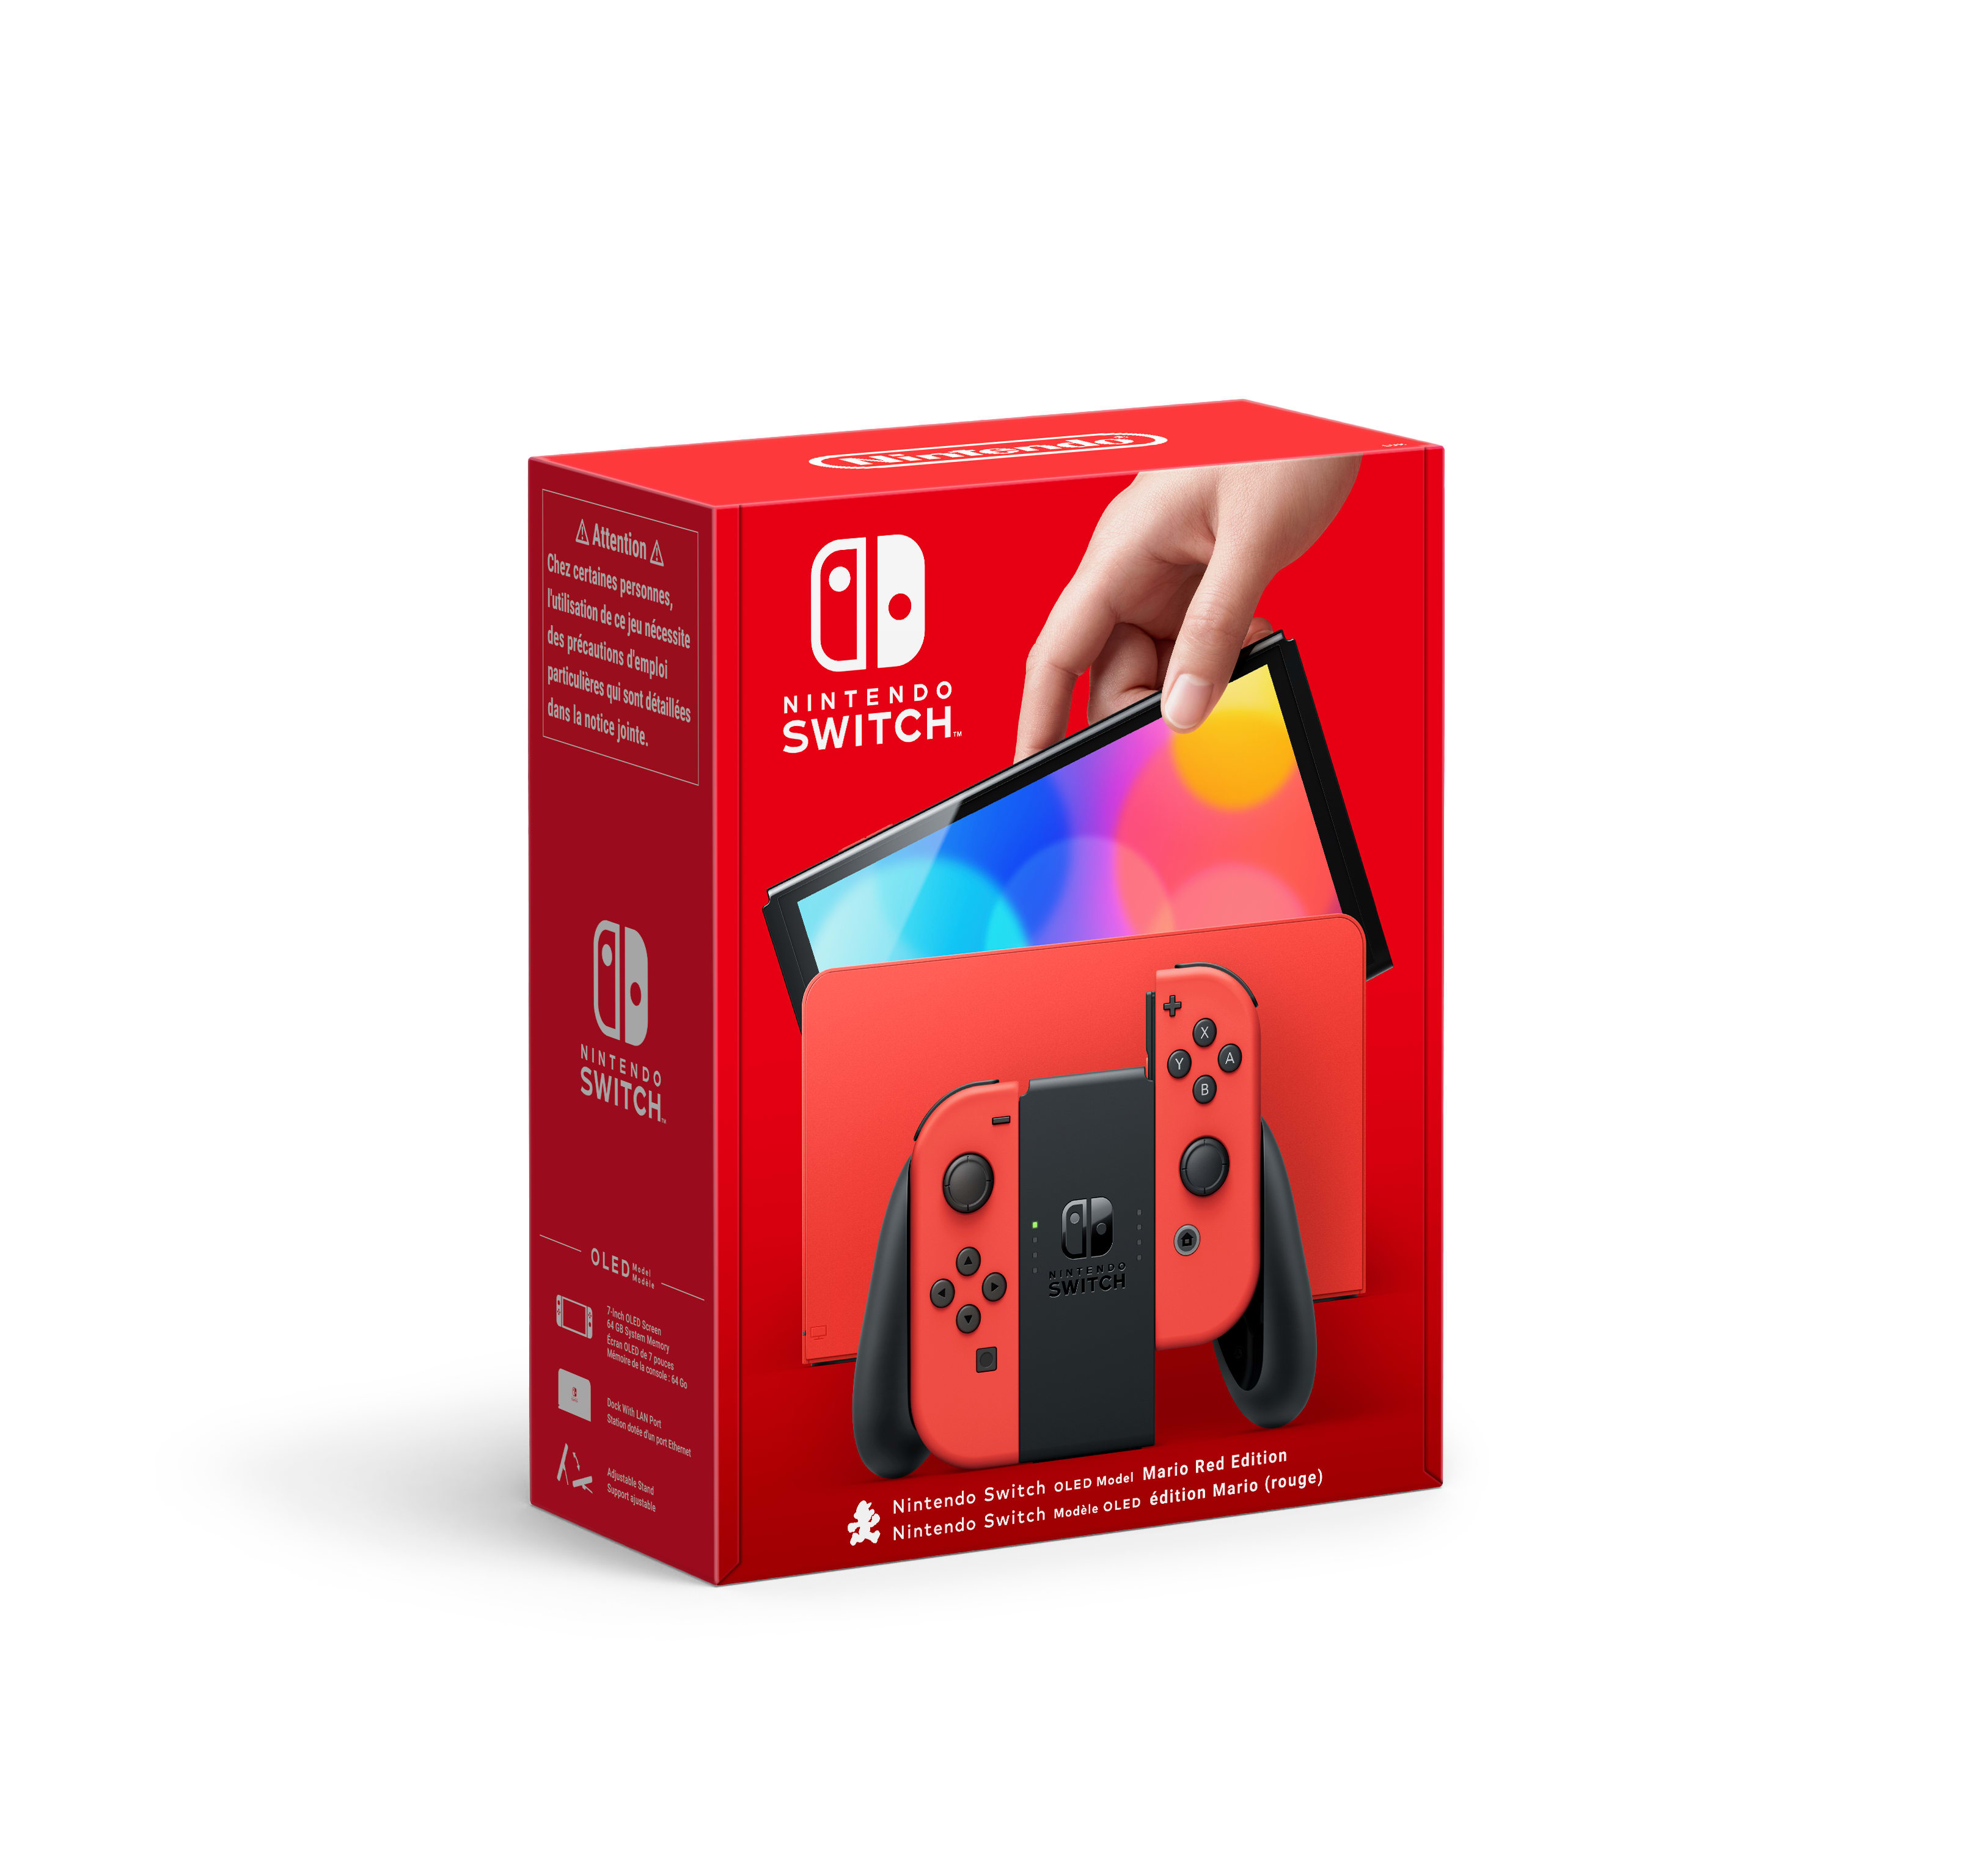 Nintendo Switch - Oled Model - Mario